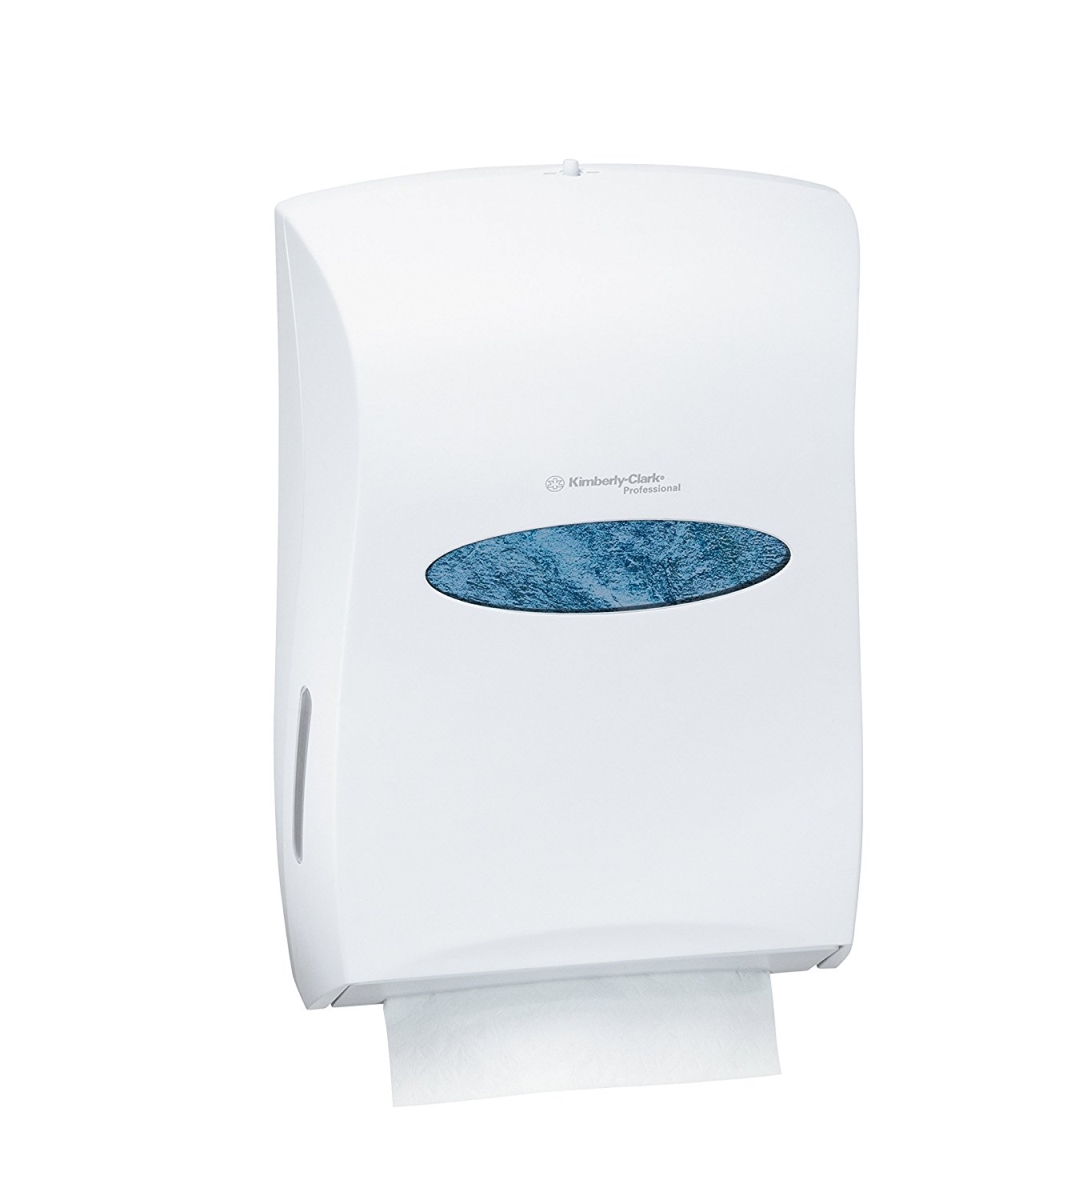 Kimberly Clark KCC 09906 18.85 x 13.31 x 5.85 in. Universal Towel Dispenser, White -  Kimberly-Clark Professional